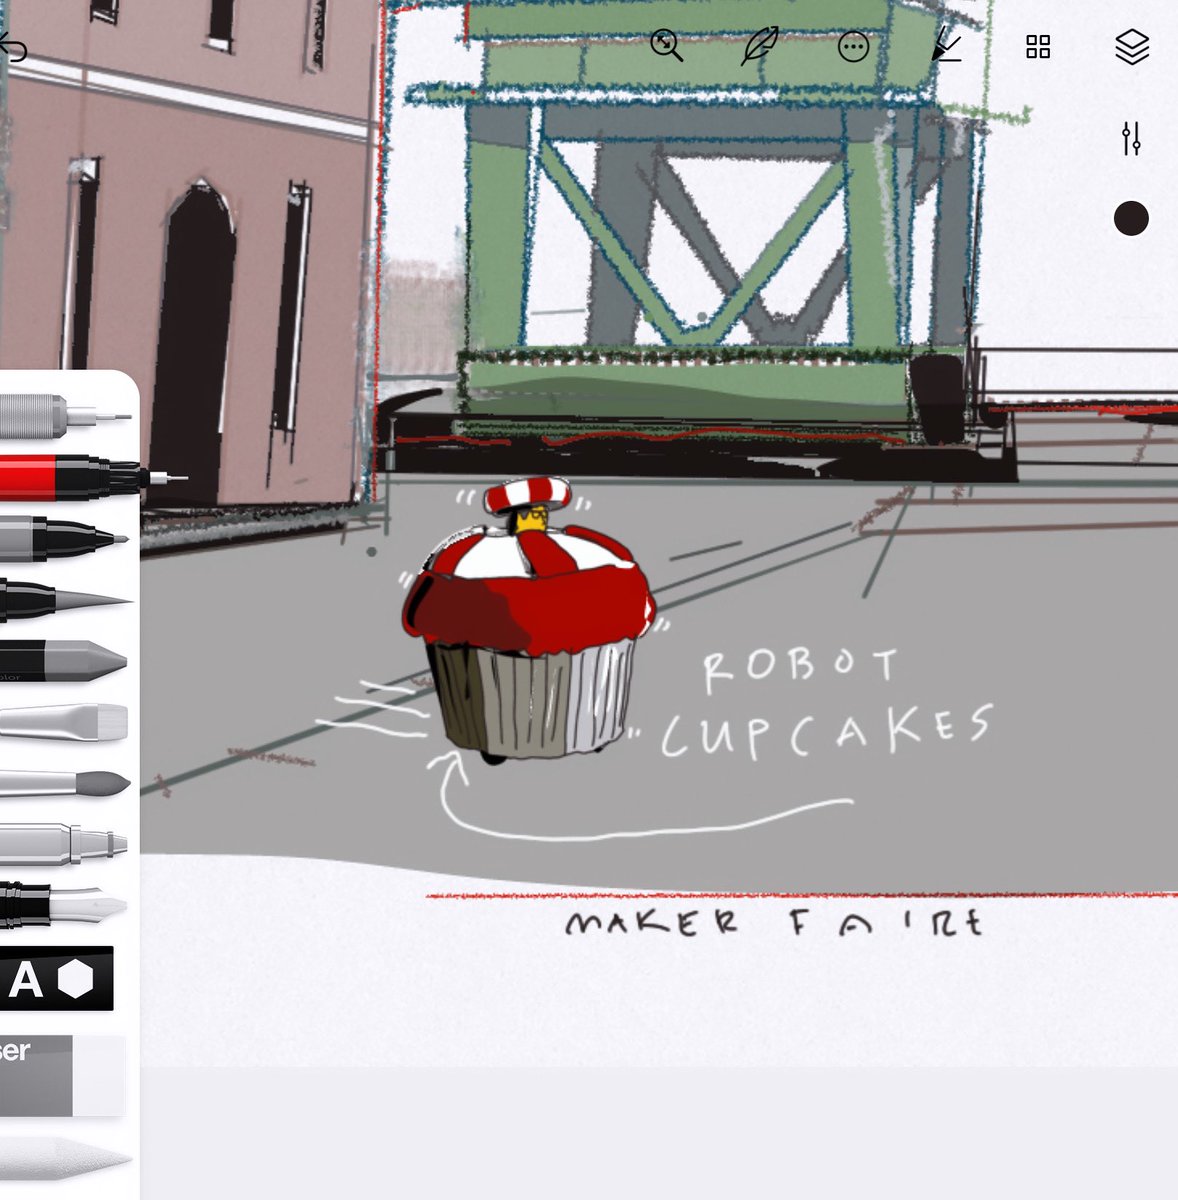 human powered robot cupcakes sketch-notes MAKER FAIRE on MARE ISLAND
#makerfaire #maker #cupcakes #vallejo #california @makerfaire #mareisland #sketch #sketchnotes #digitalart #art #digital #digitalpainter #dougwittnebel #makersmovement #creator  #robot #robotics #crane #shipyard